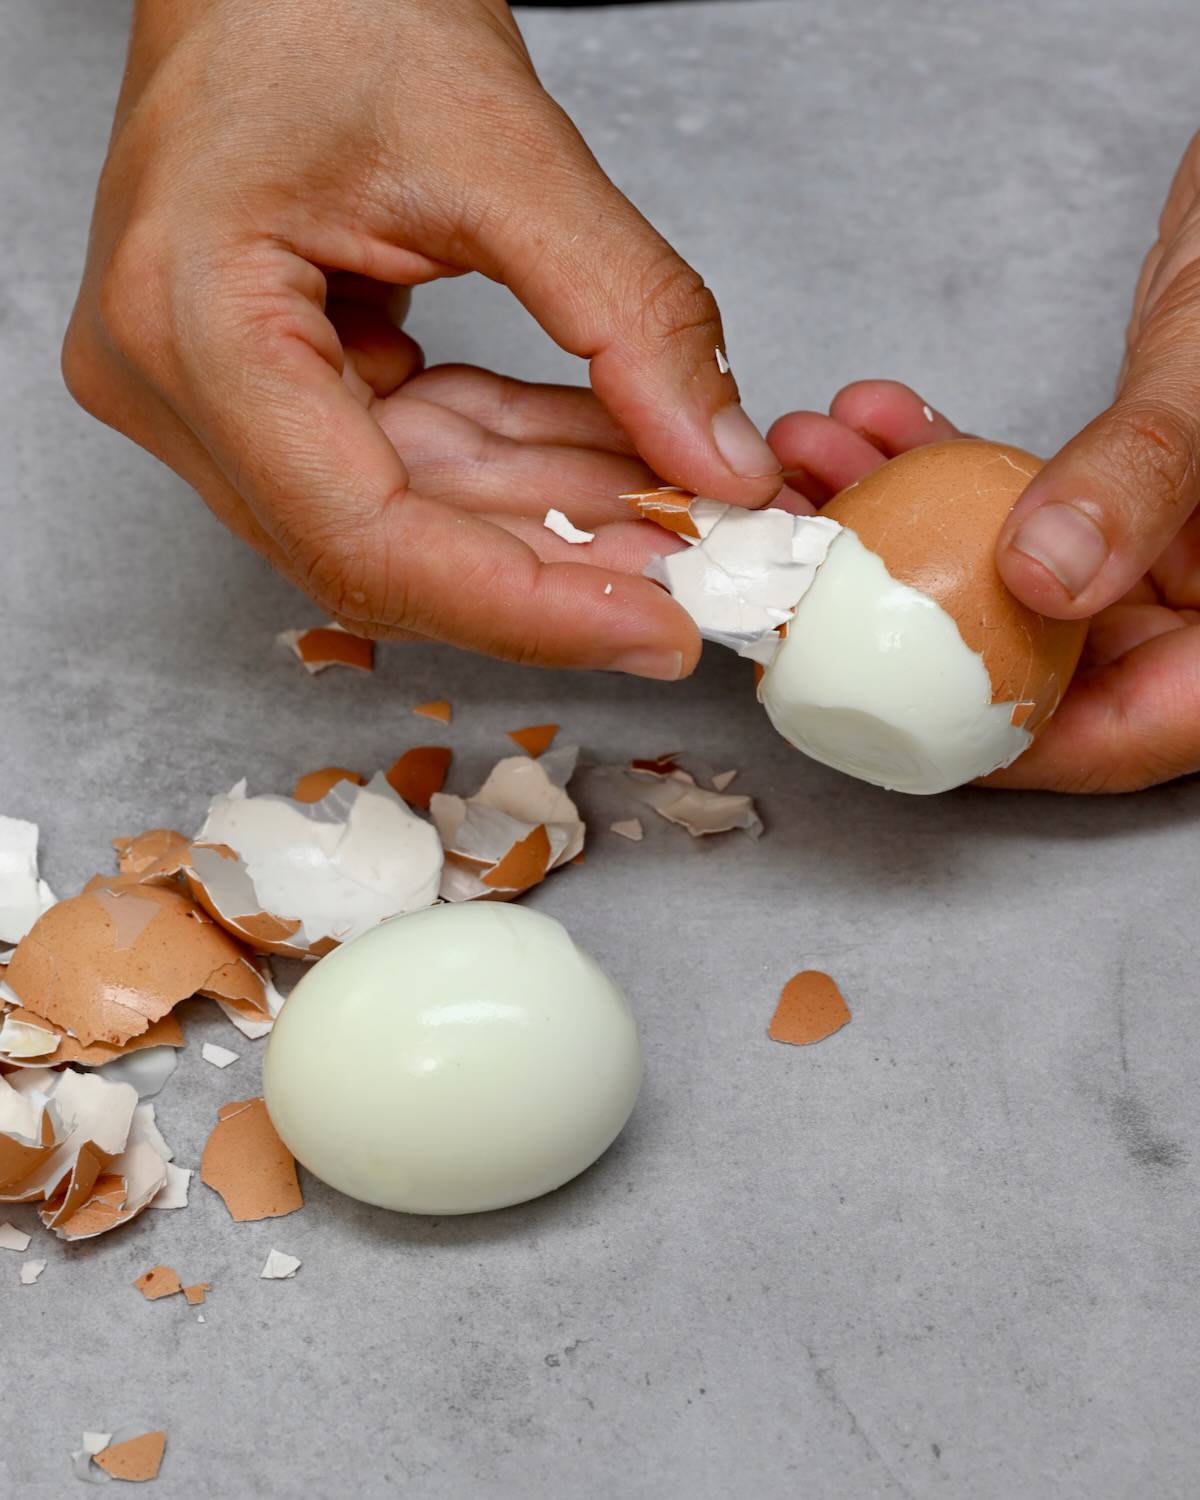 The Simple Secret to Easy Peel Boiled Eggs